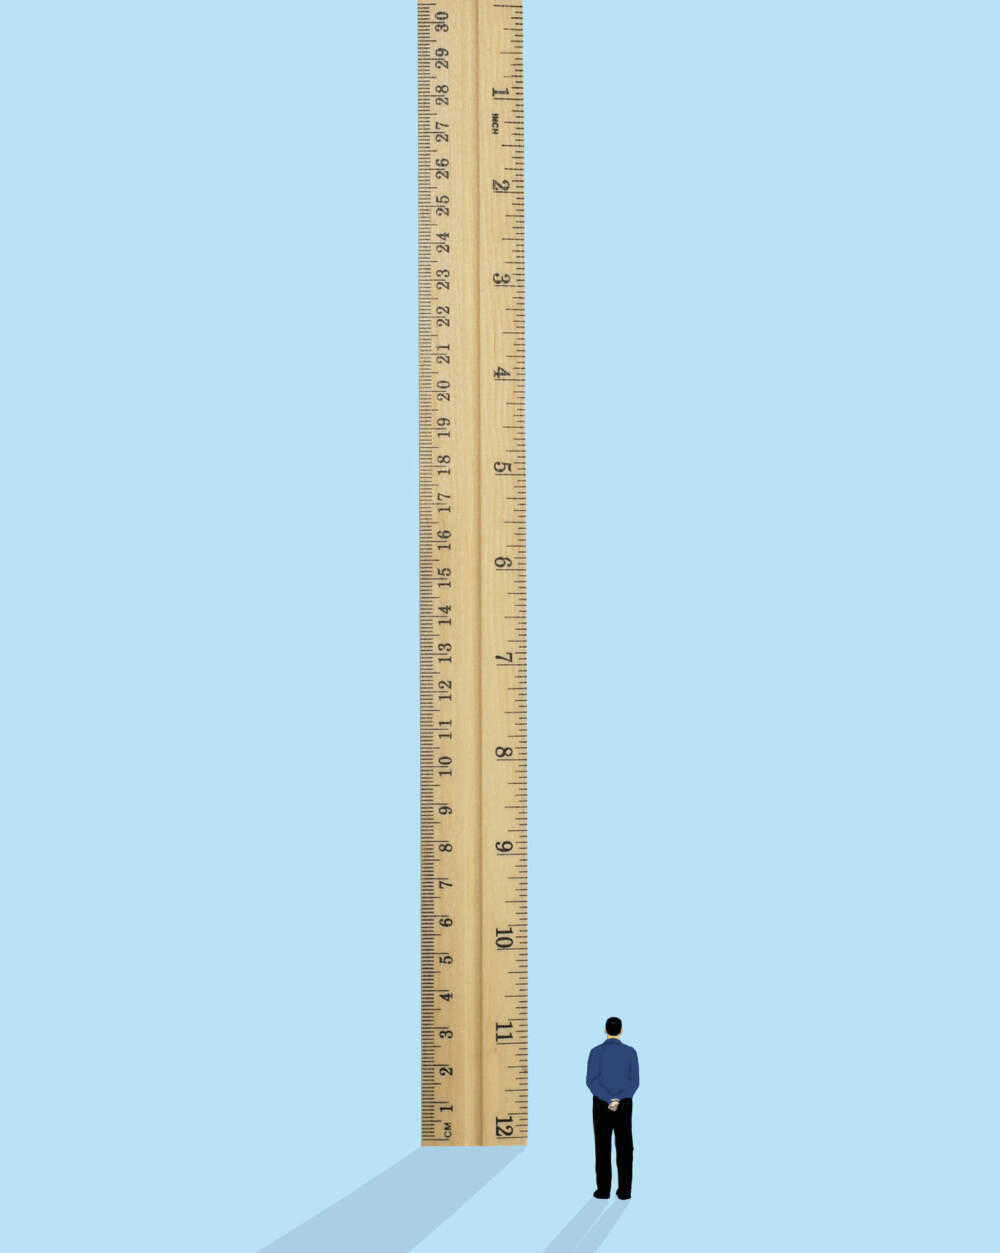 Longer/Taller and Shorter Concept, Long/Tall and Short